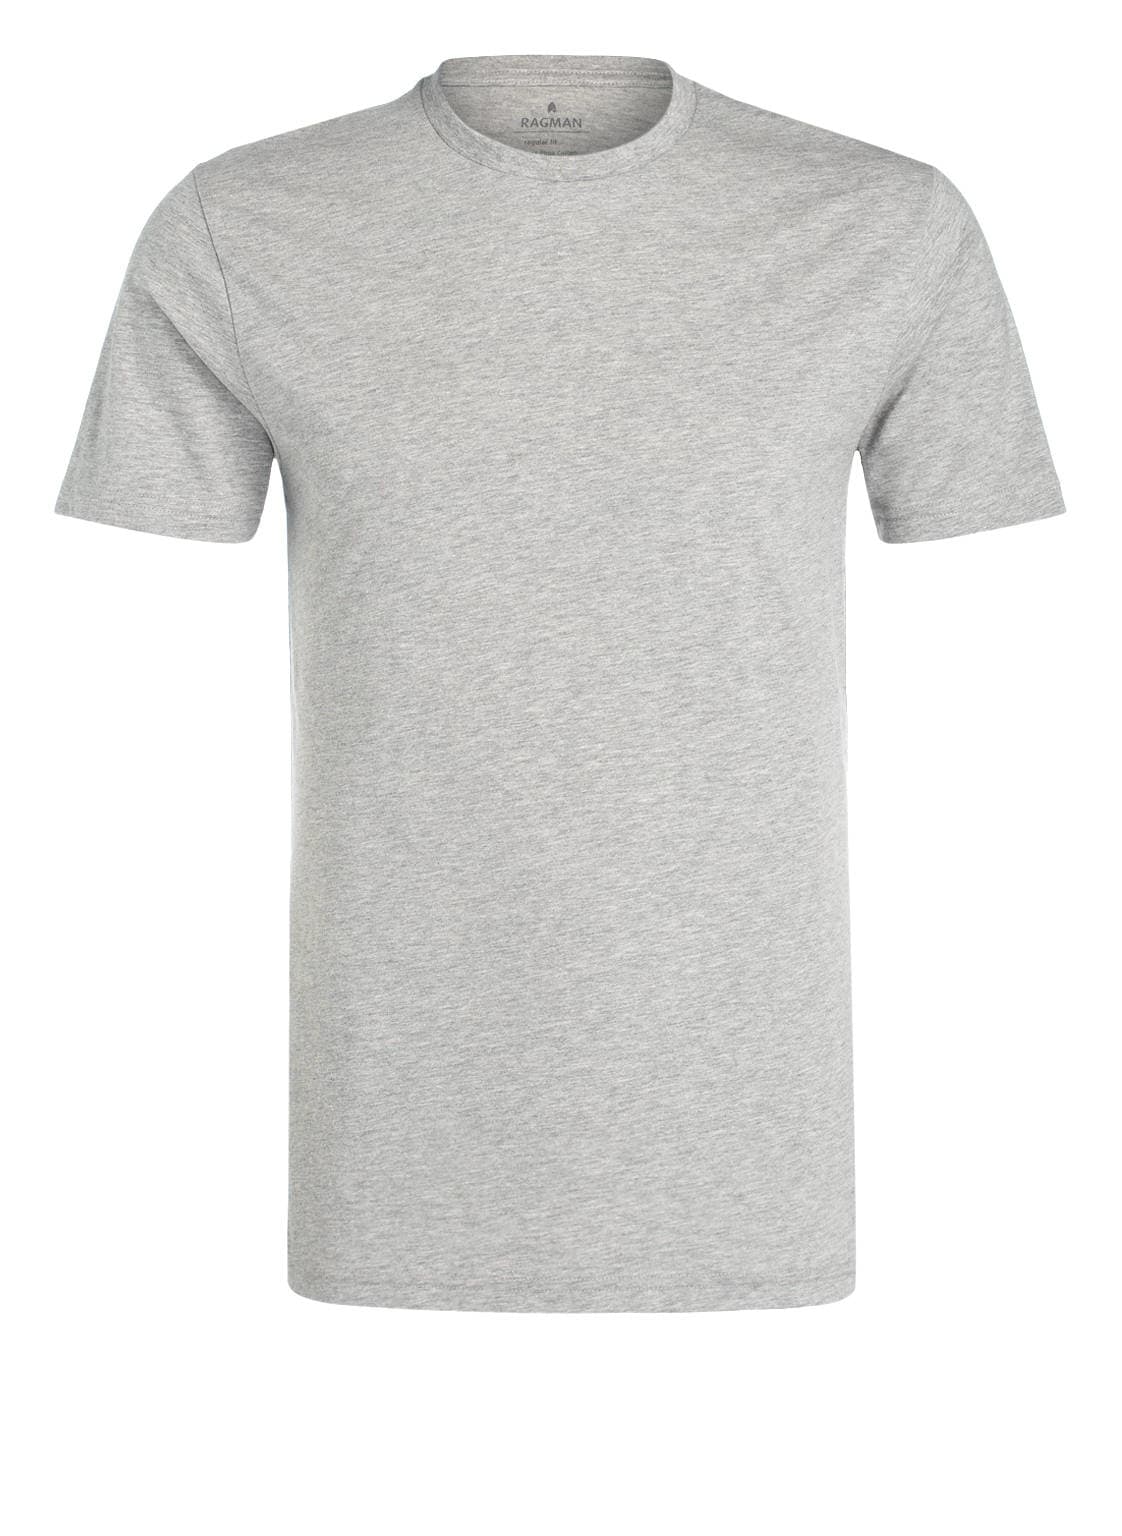 Ragman T-Shirt Regular Fit grau von RAGMAN